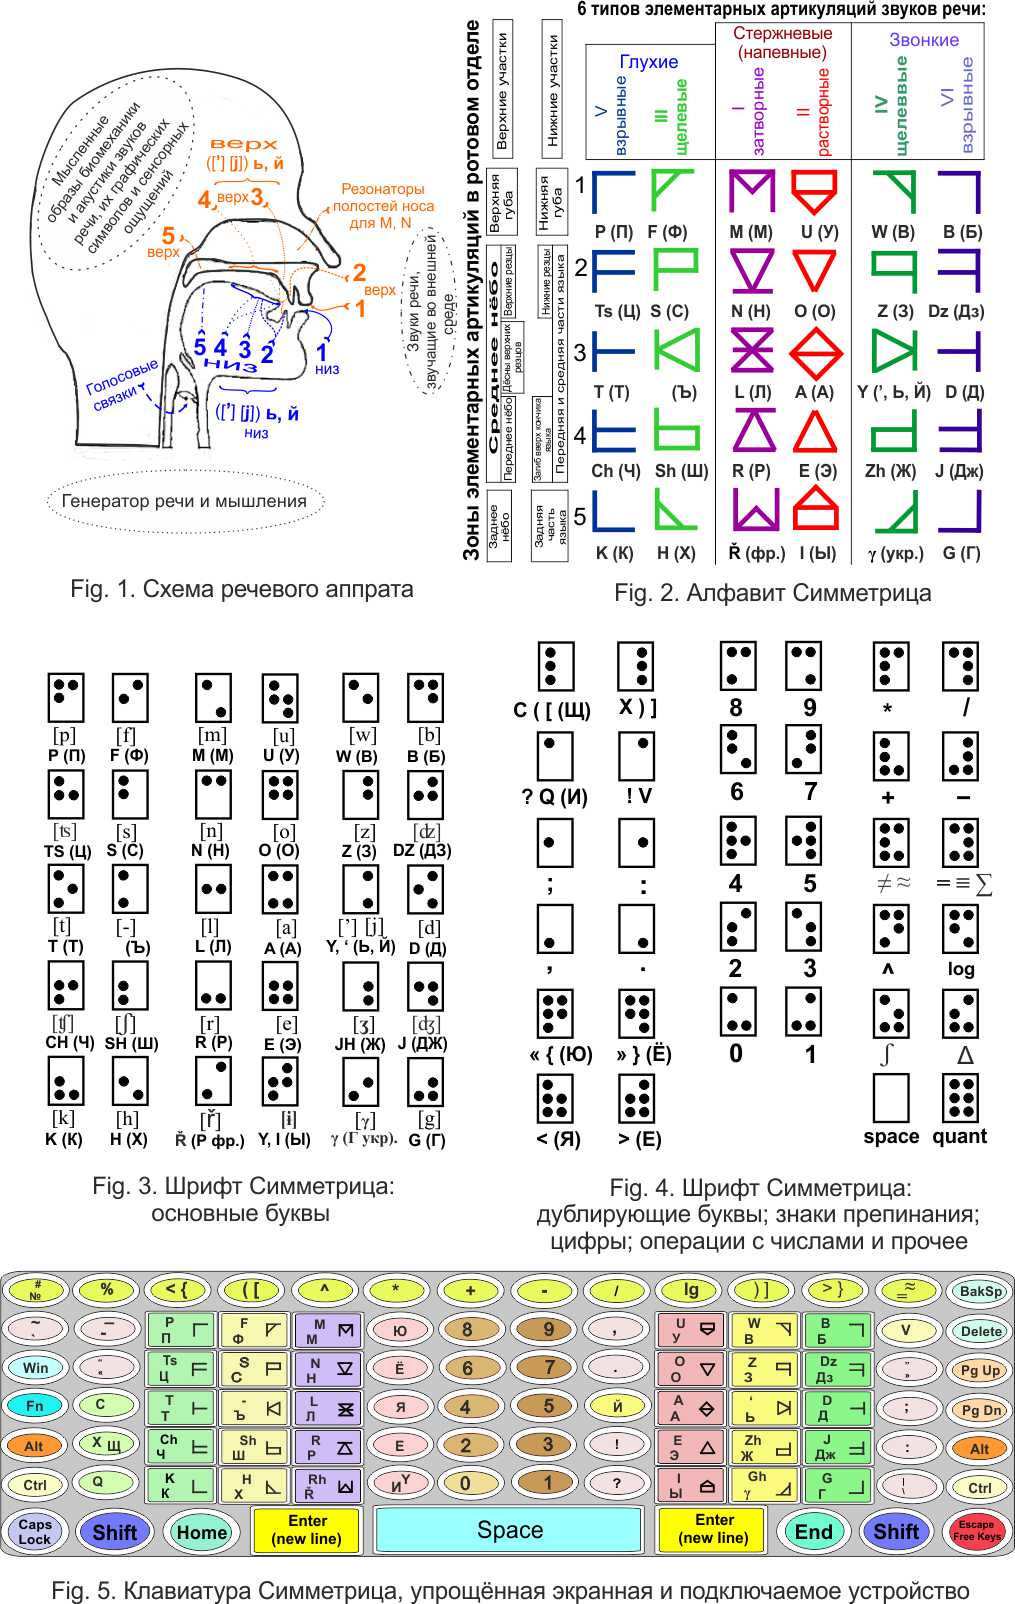 Схема артикуляции звуков речи; Алфавит Симметрица и рельефно-точечный Шрифт Симметрица